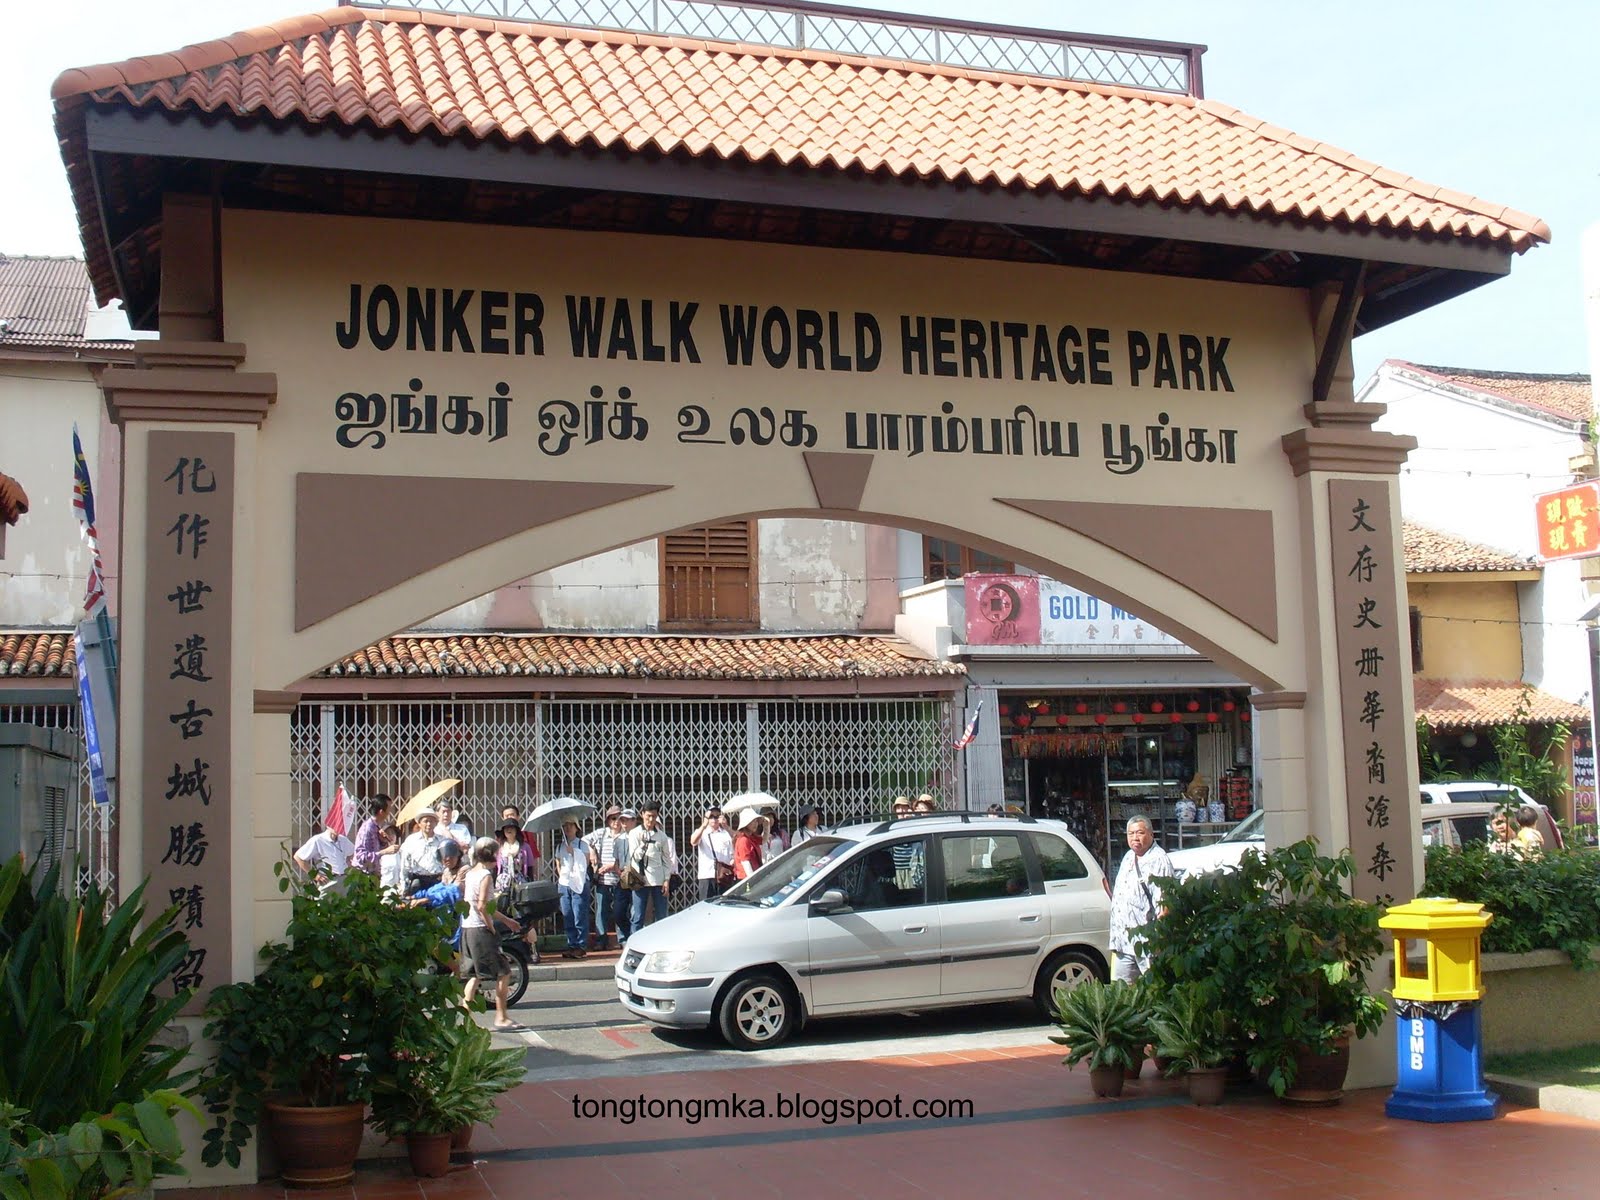 小地方的大小事 Malacca happening: 鸡场街世遗公园 JONKER WALK WORLD HERITAGE PARK